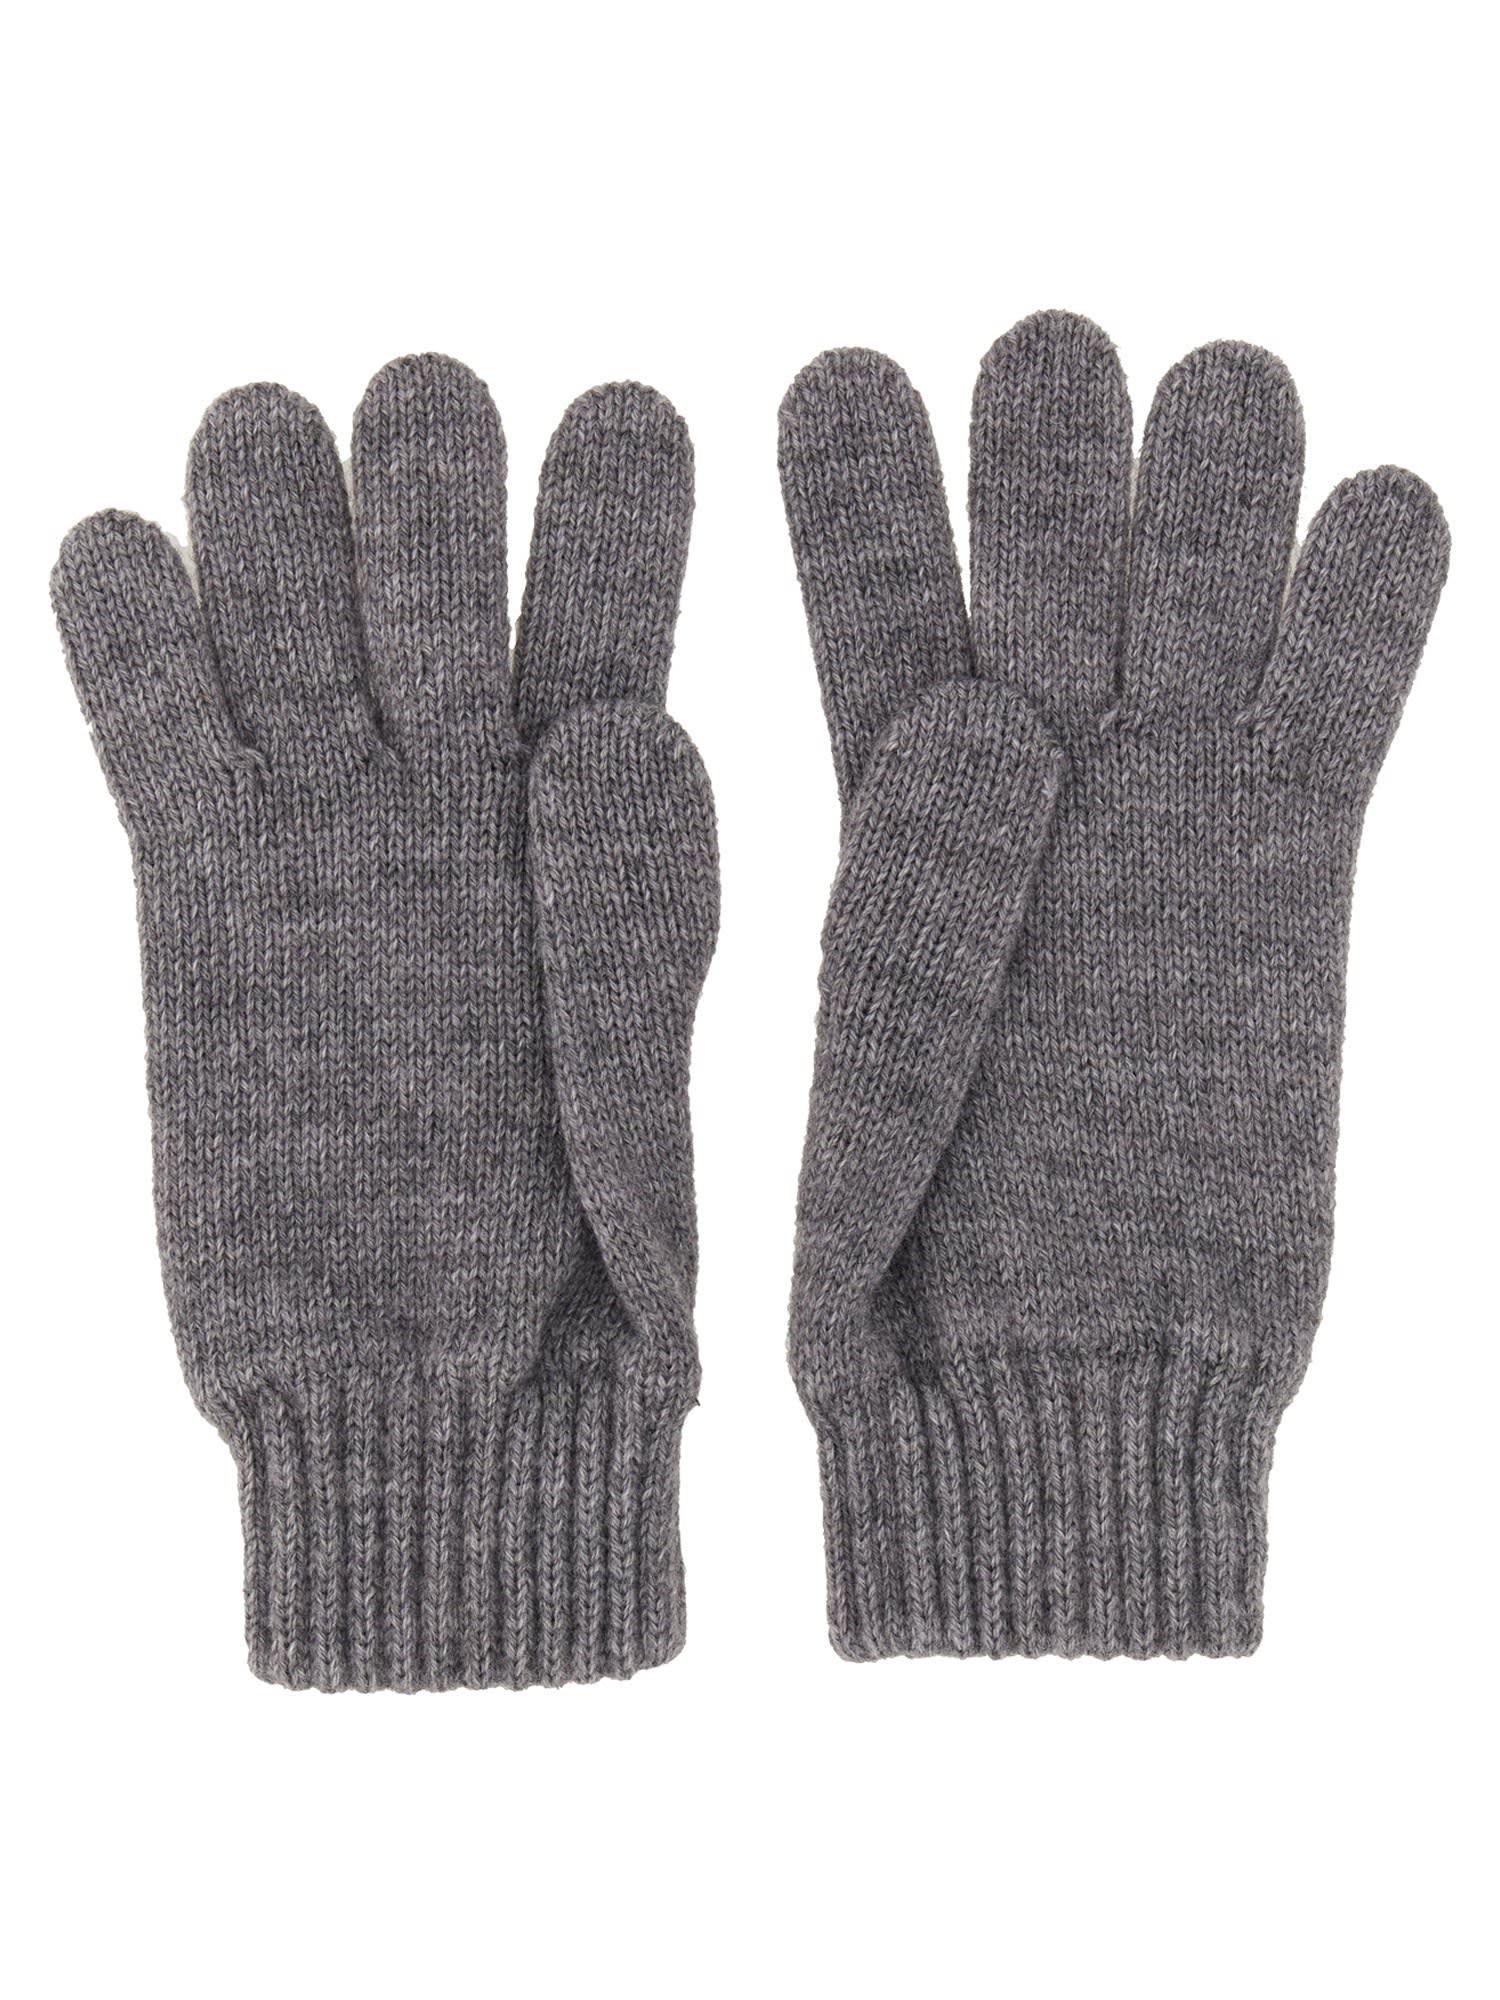 Saint James Roche Gloves in Gray | Lyst